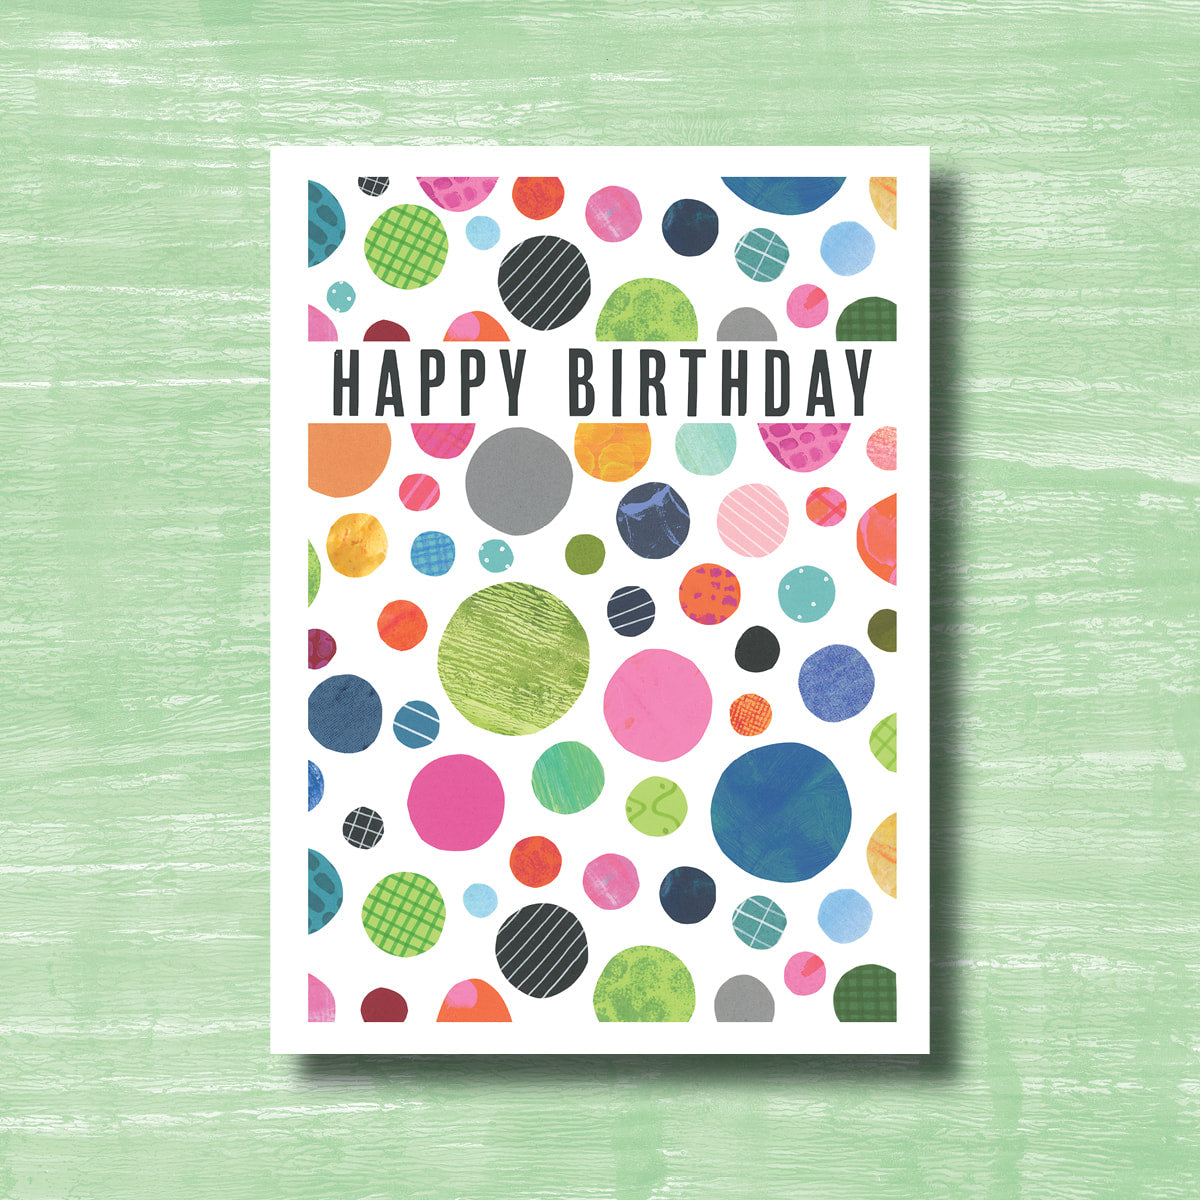 Birthday Polka Dot - Greeting Card